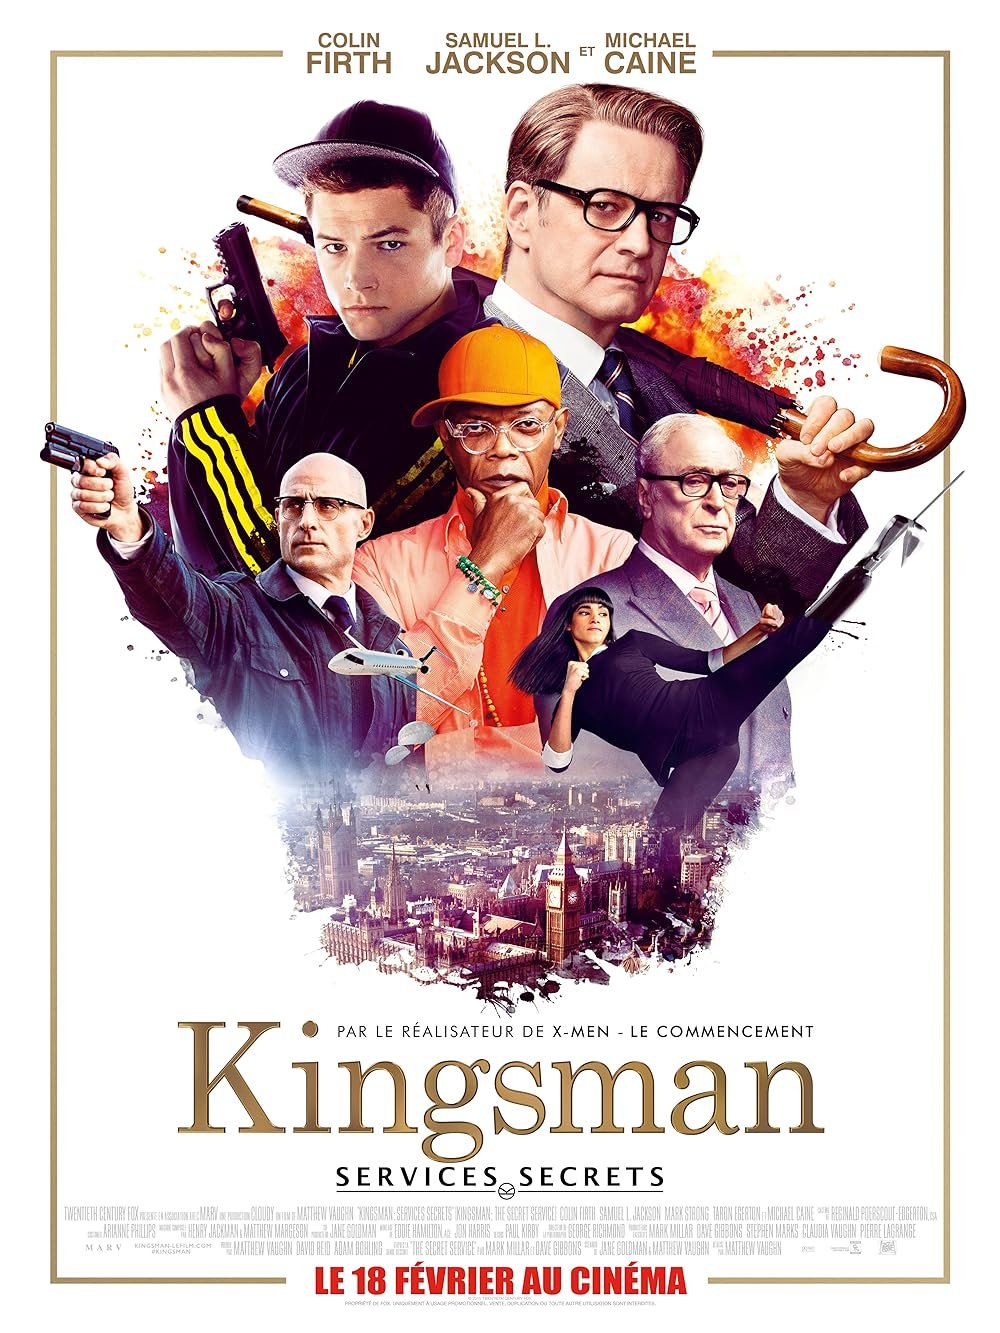 Kingsman The secret service , under movies like argylle listicle